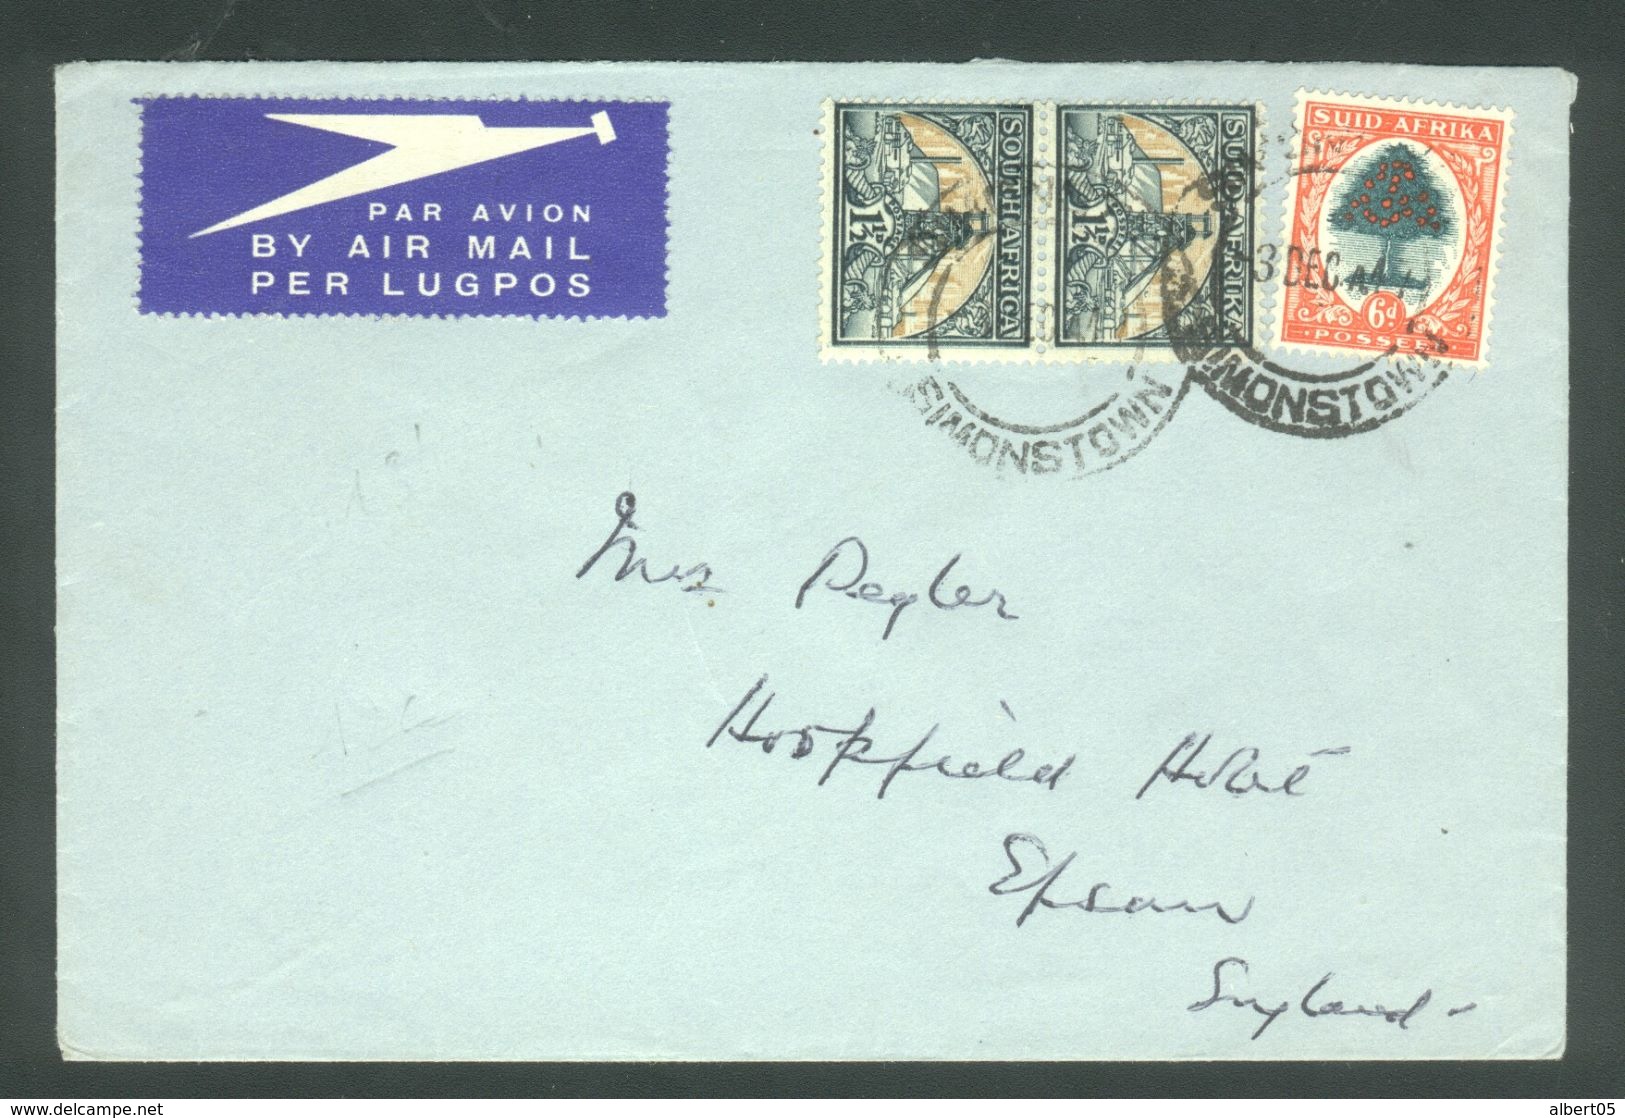 Enveloppe Per Lugpos 3 Dec 1947 - Covers & Documents